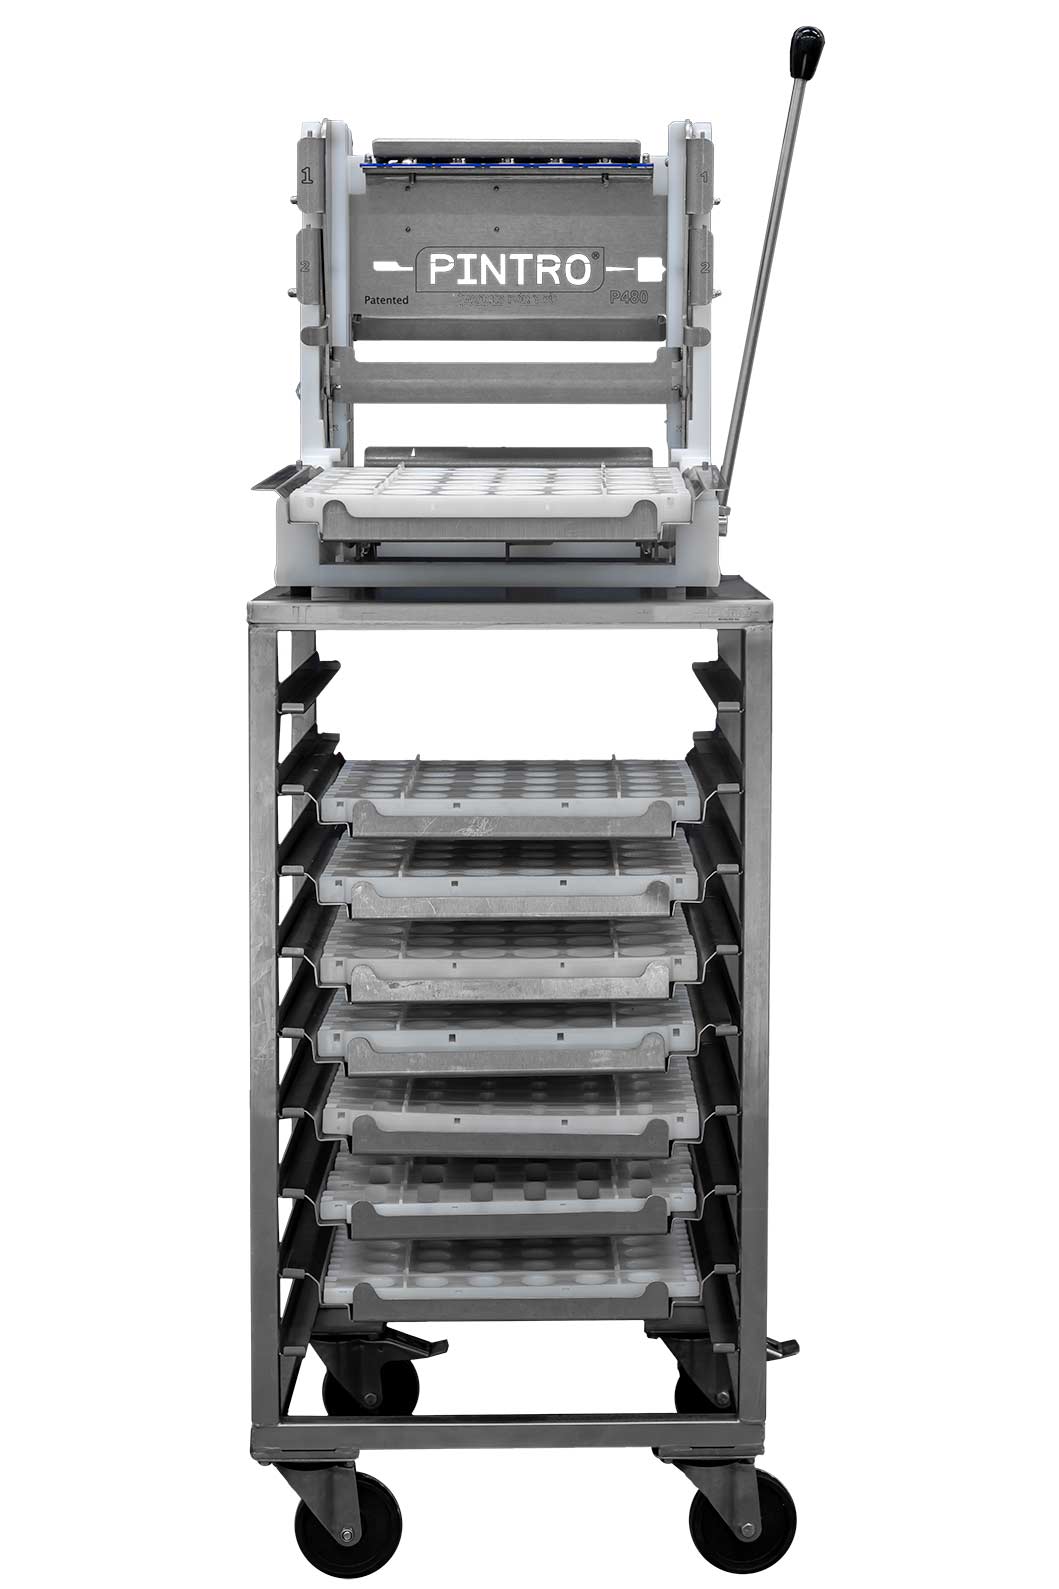 PINTRO P480 manual skewering machine working table and mobile rack